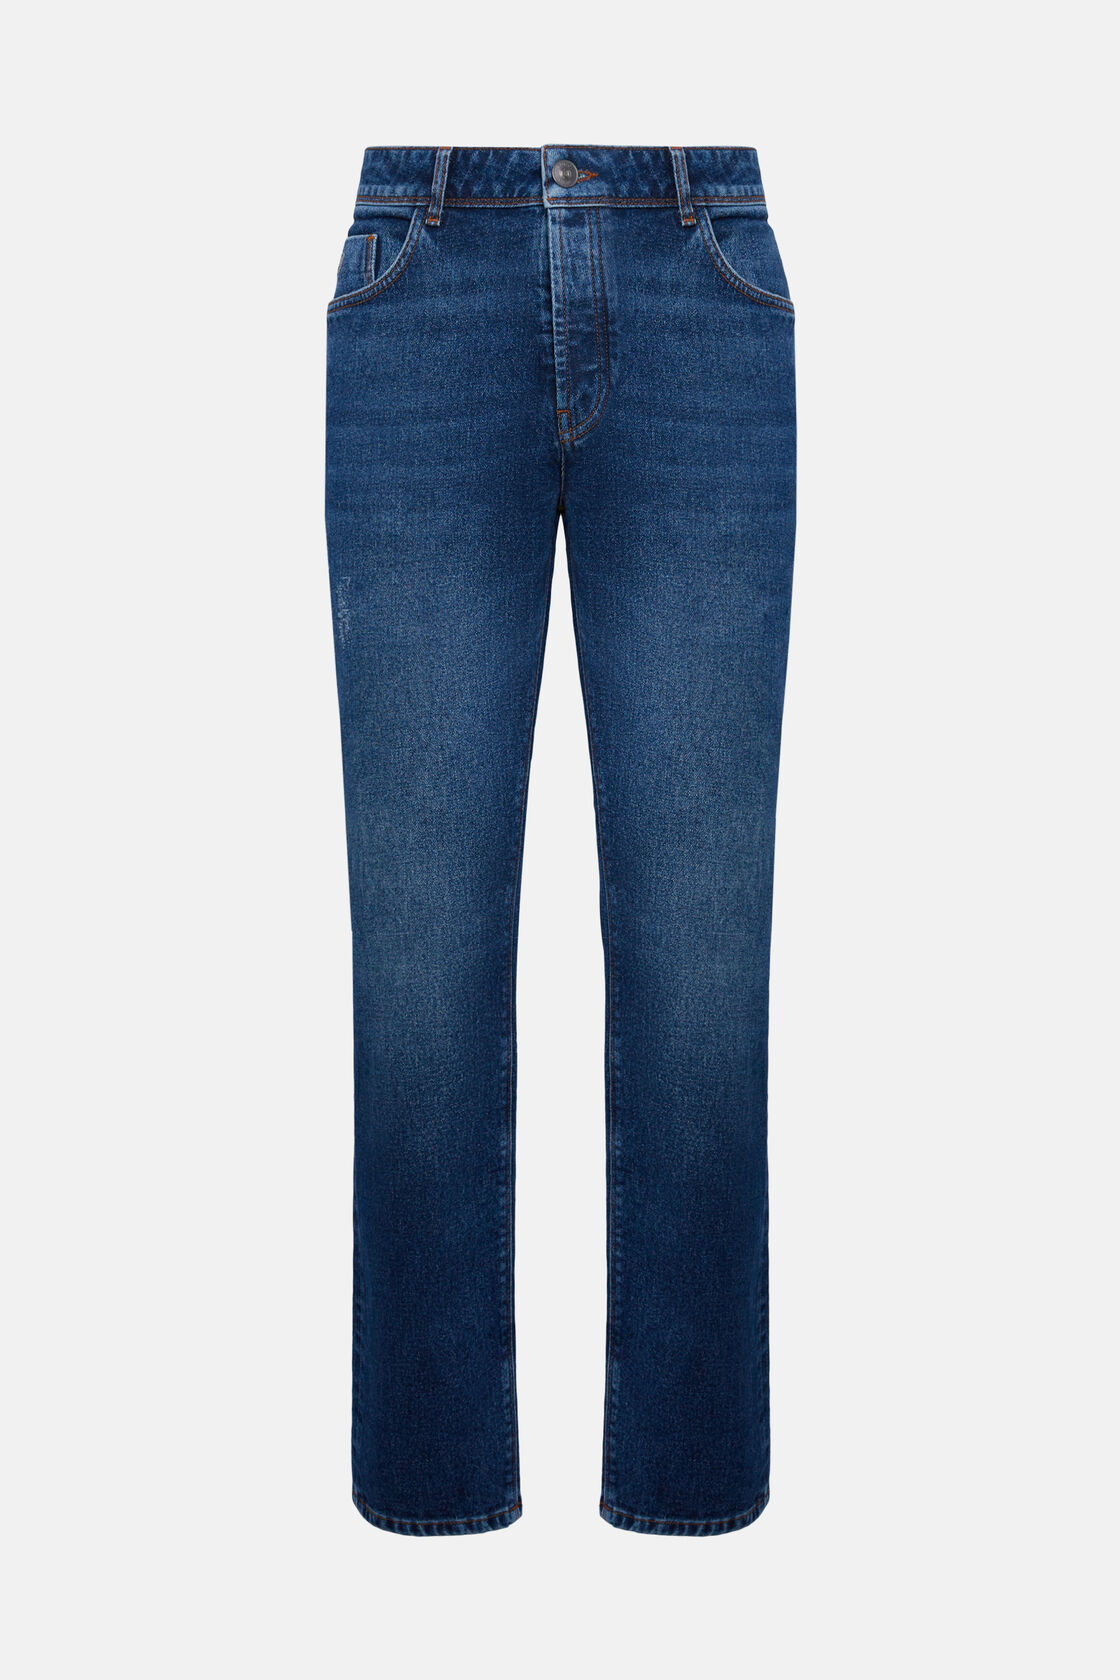 Donkerblauwe stretch denim jeans, Dark Blue, hi-res